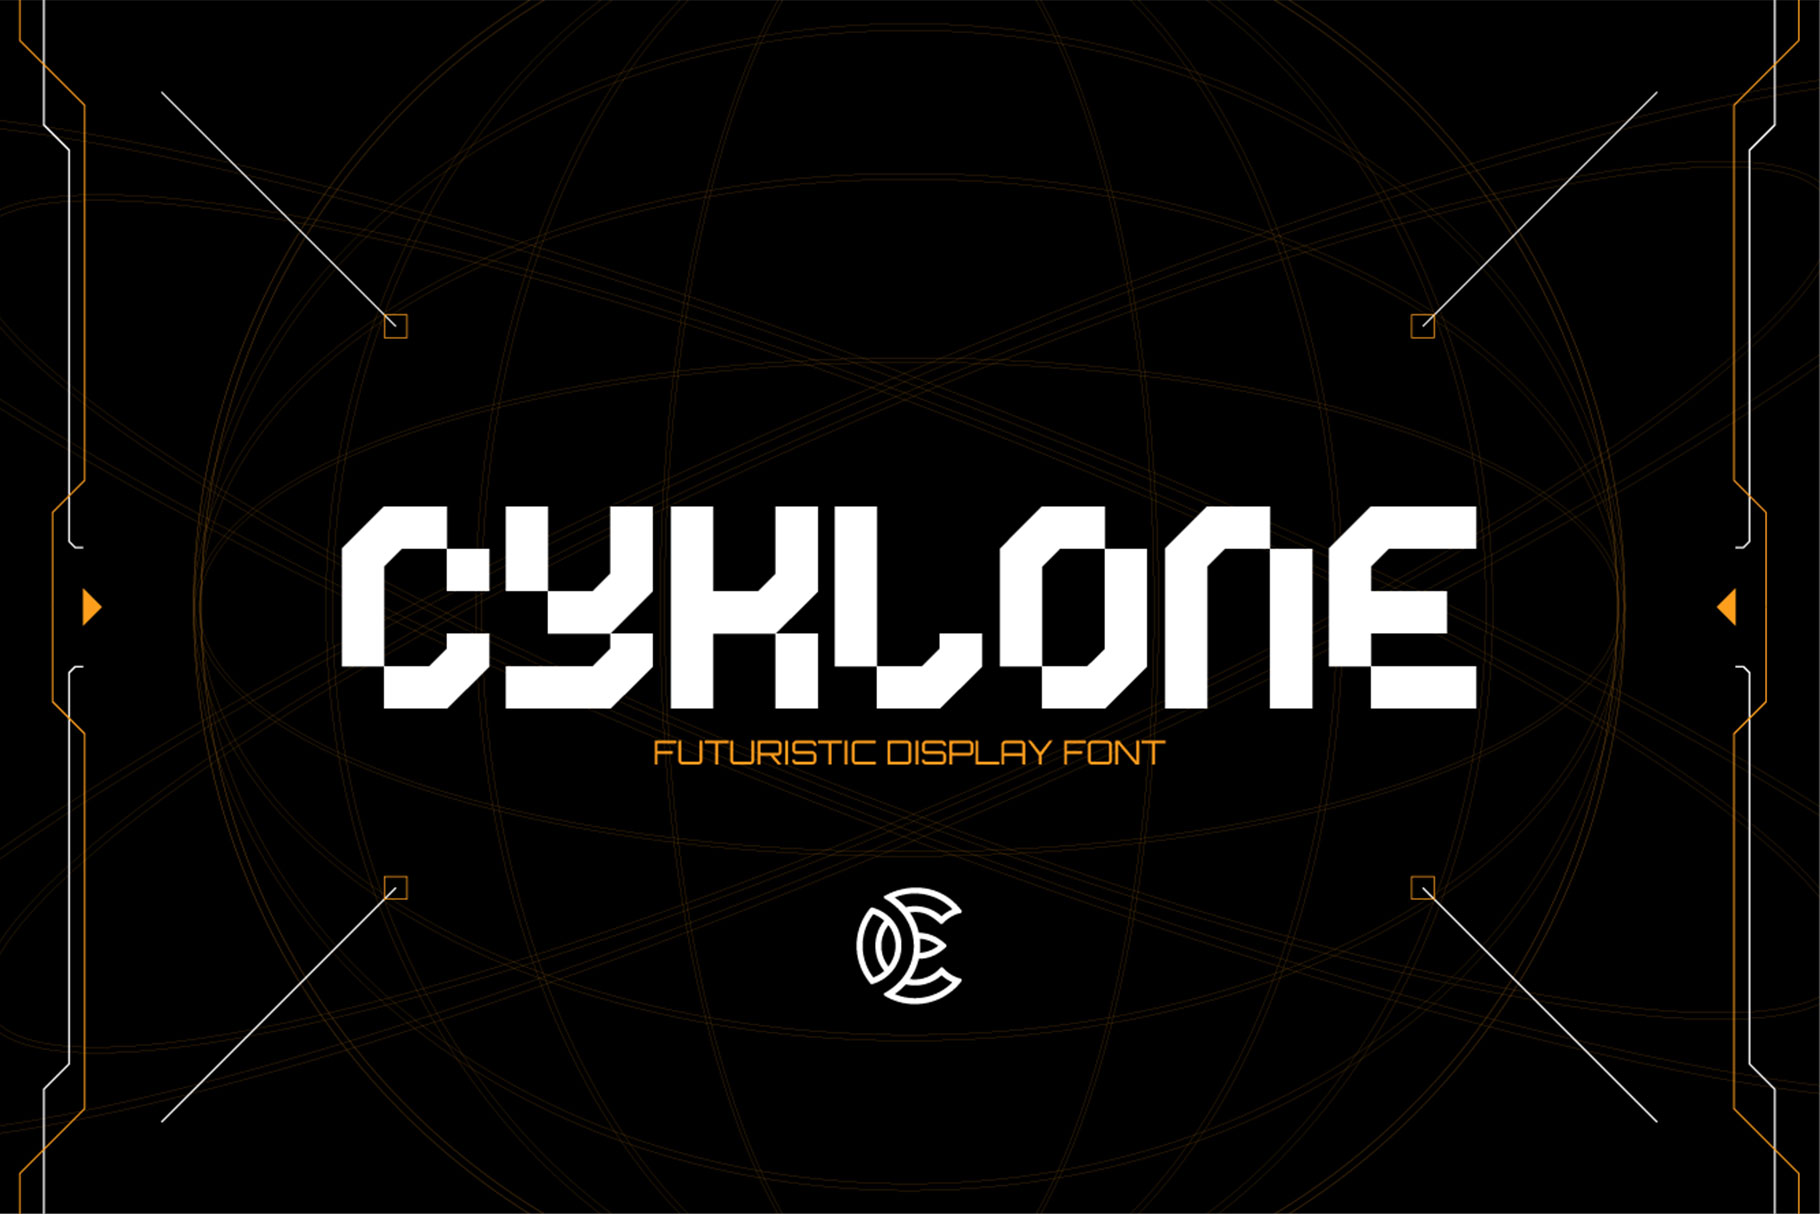 CYKLONE - Futuristic Display Font facebook image.